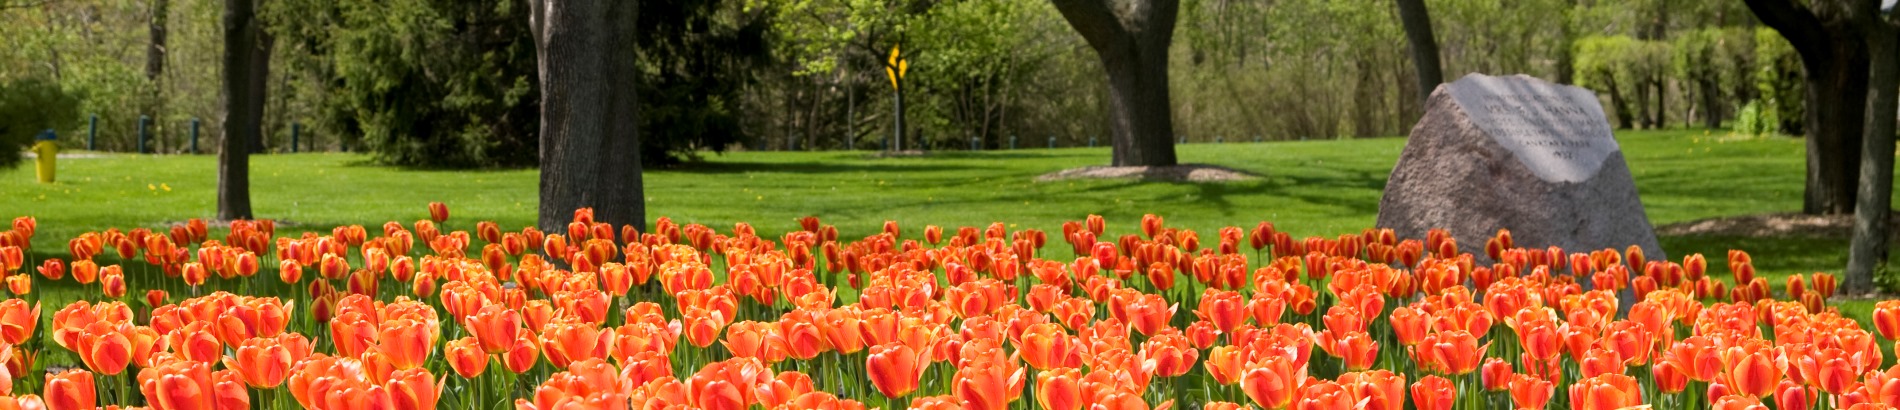 Garden of tulips in a park